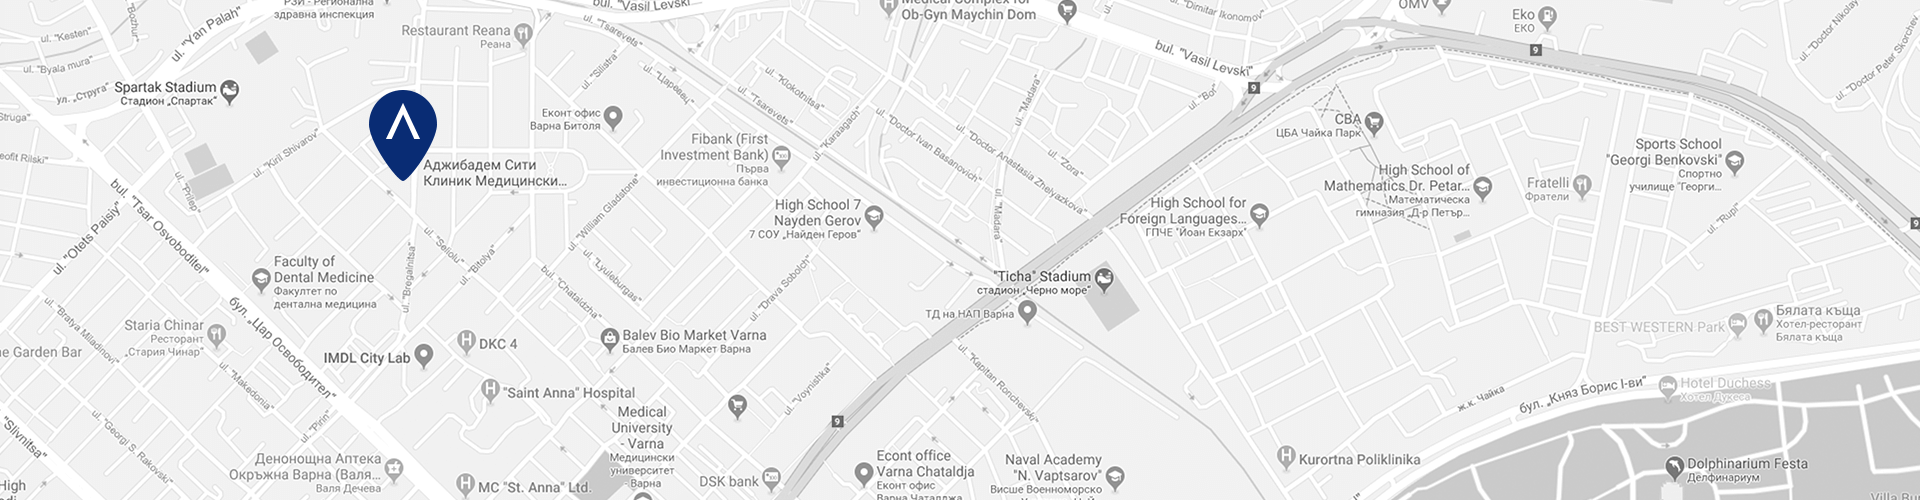 acibadem-city-clinic-medical-center-varna-google-maps-image.png